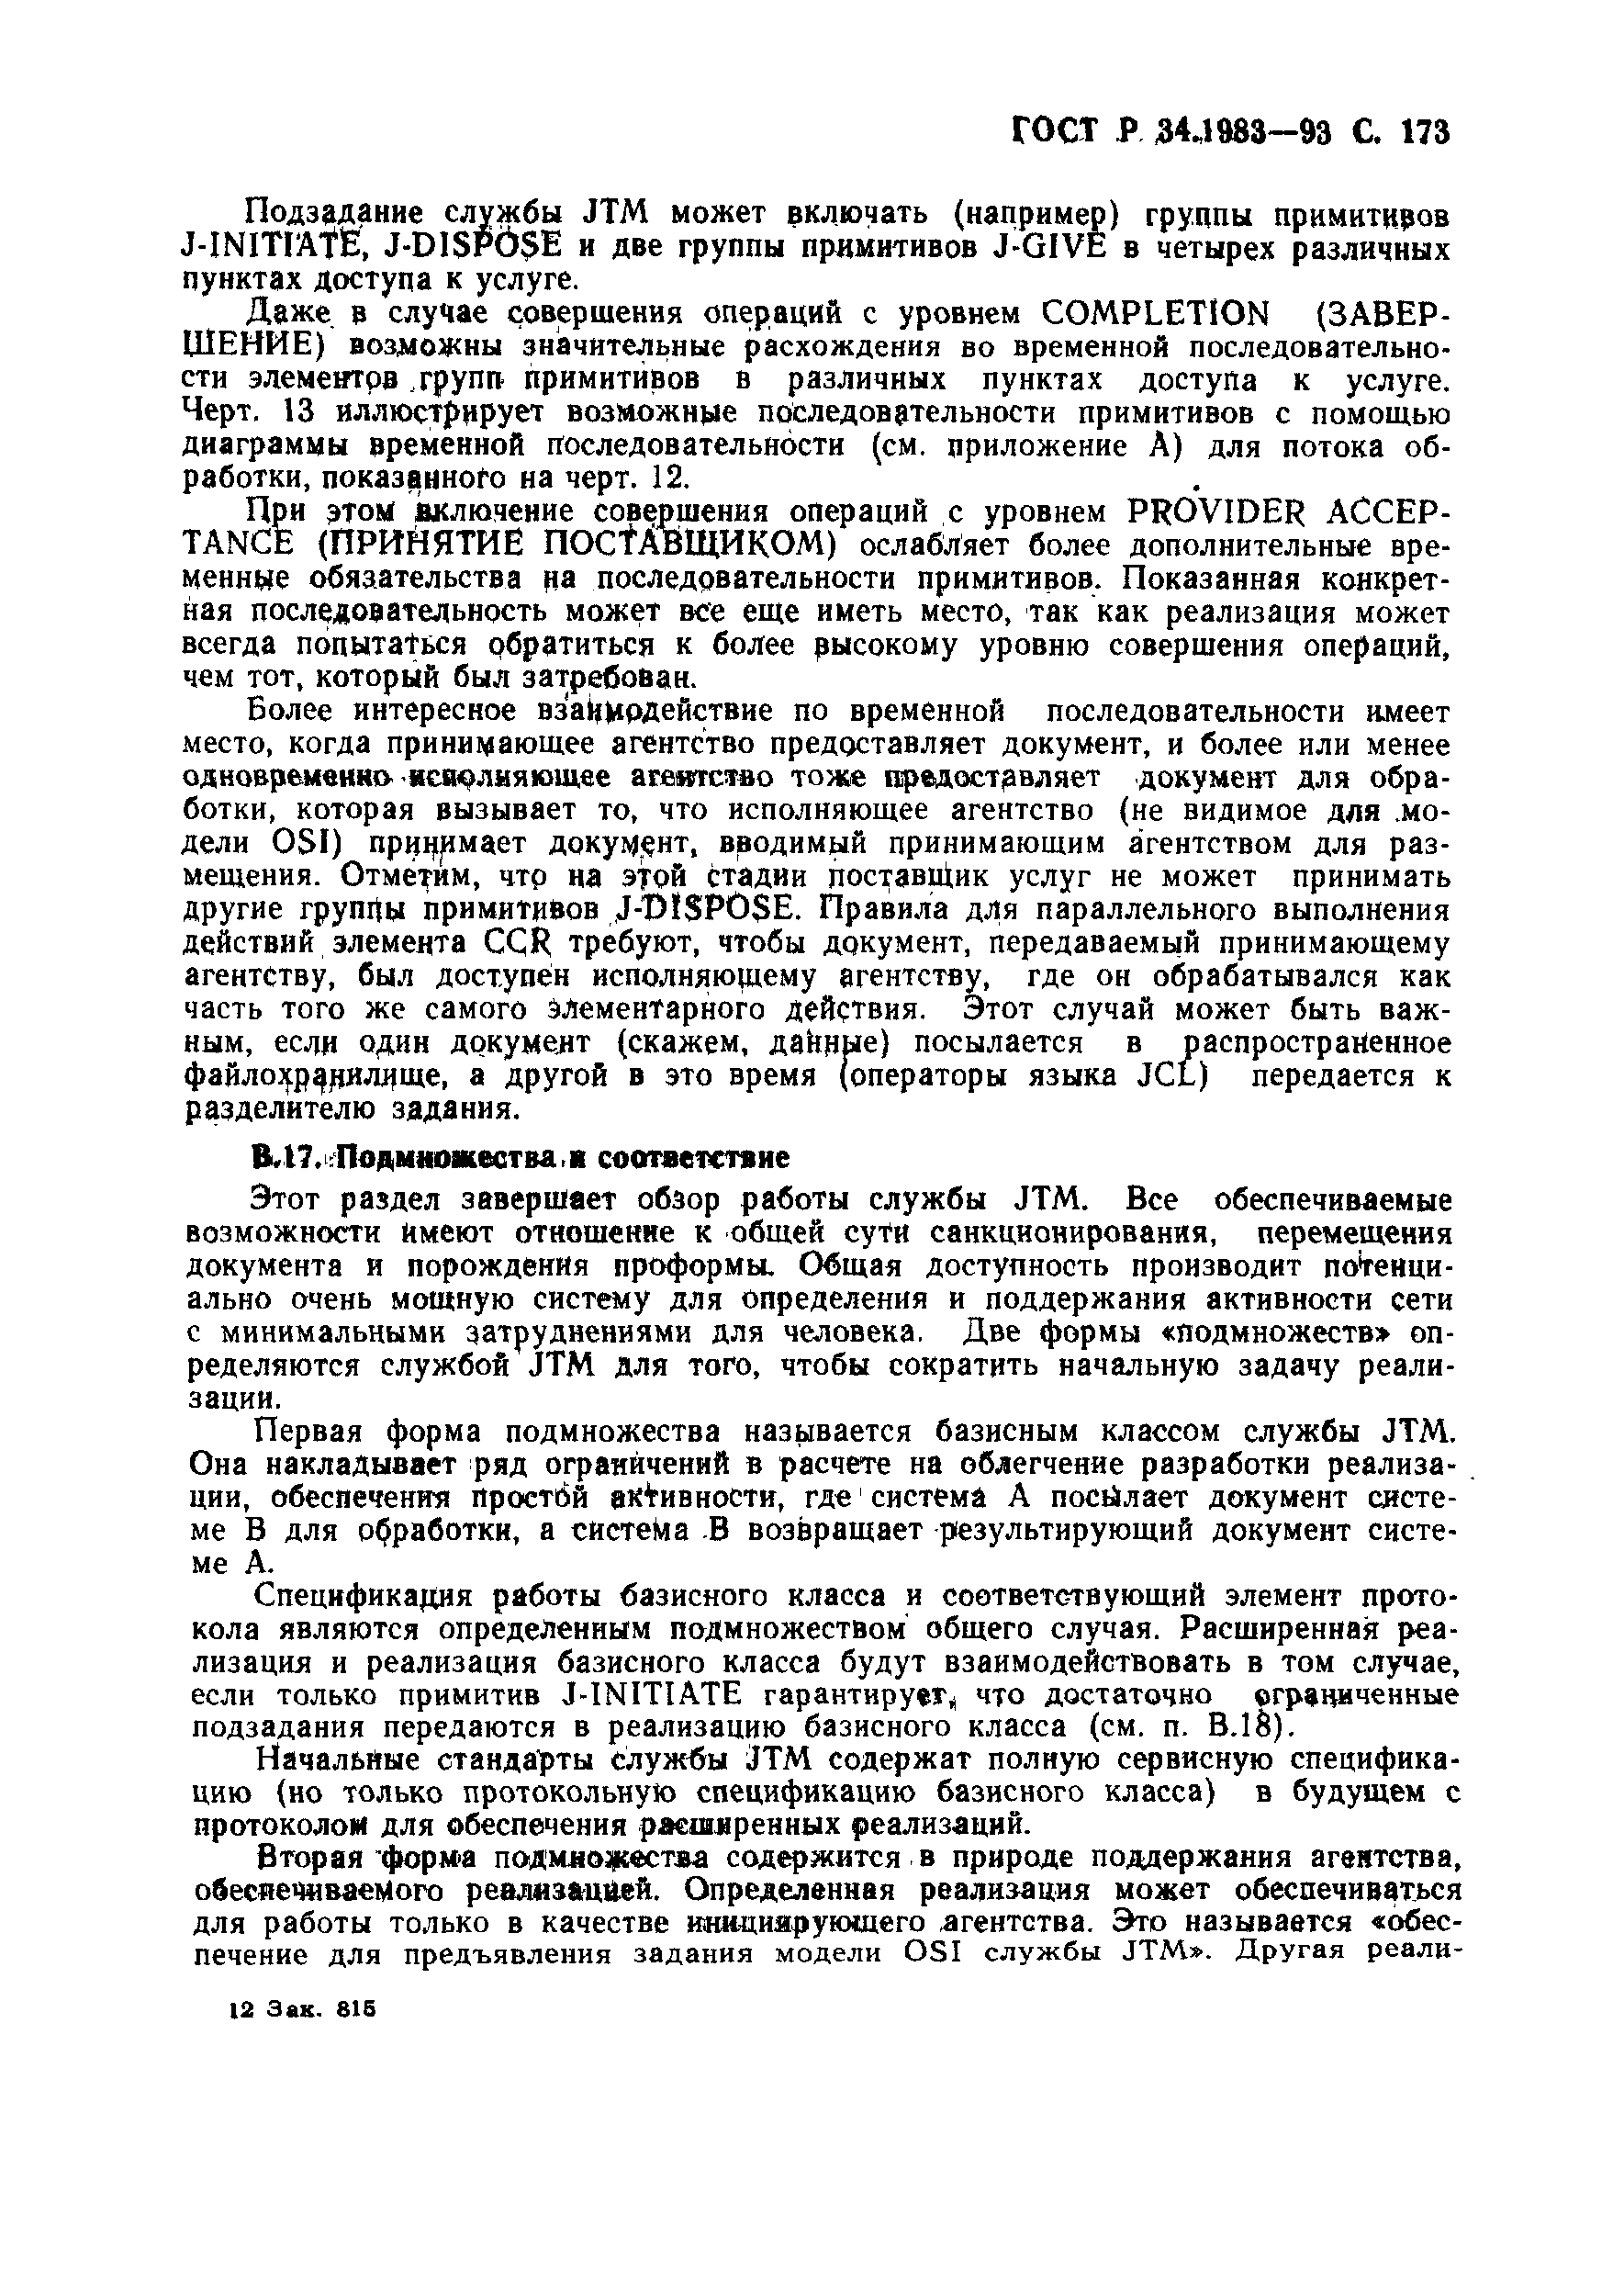 ГОСТ Р 34.1983-93. Страница 174